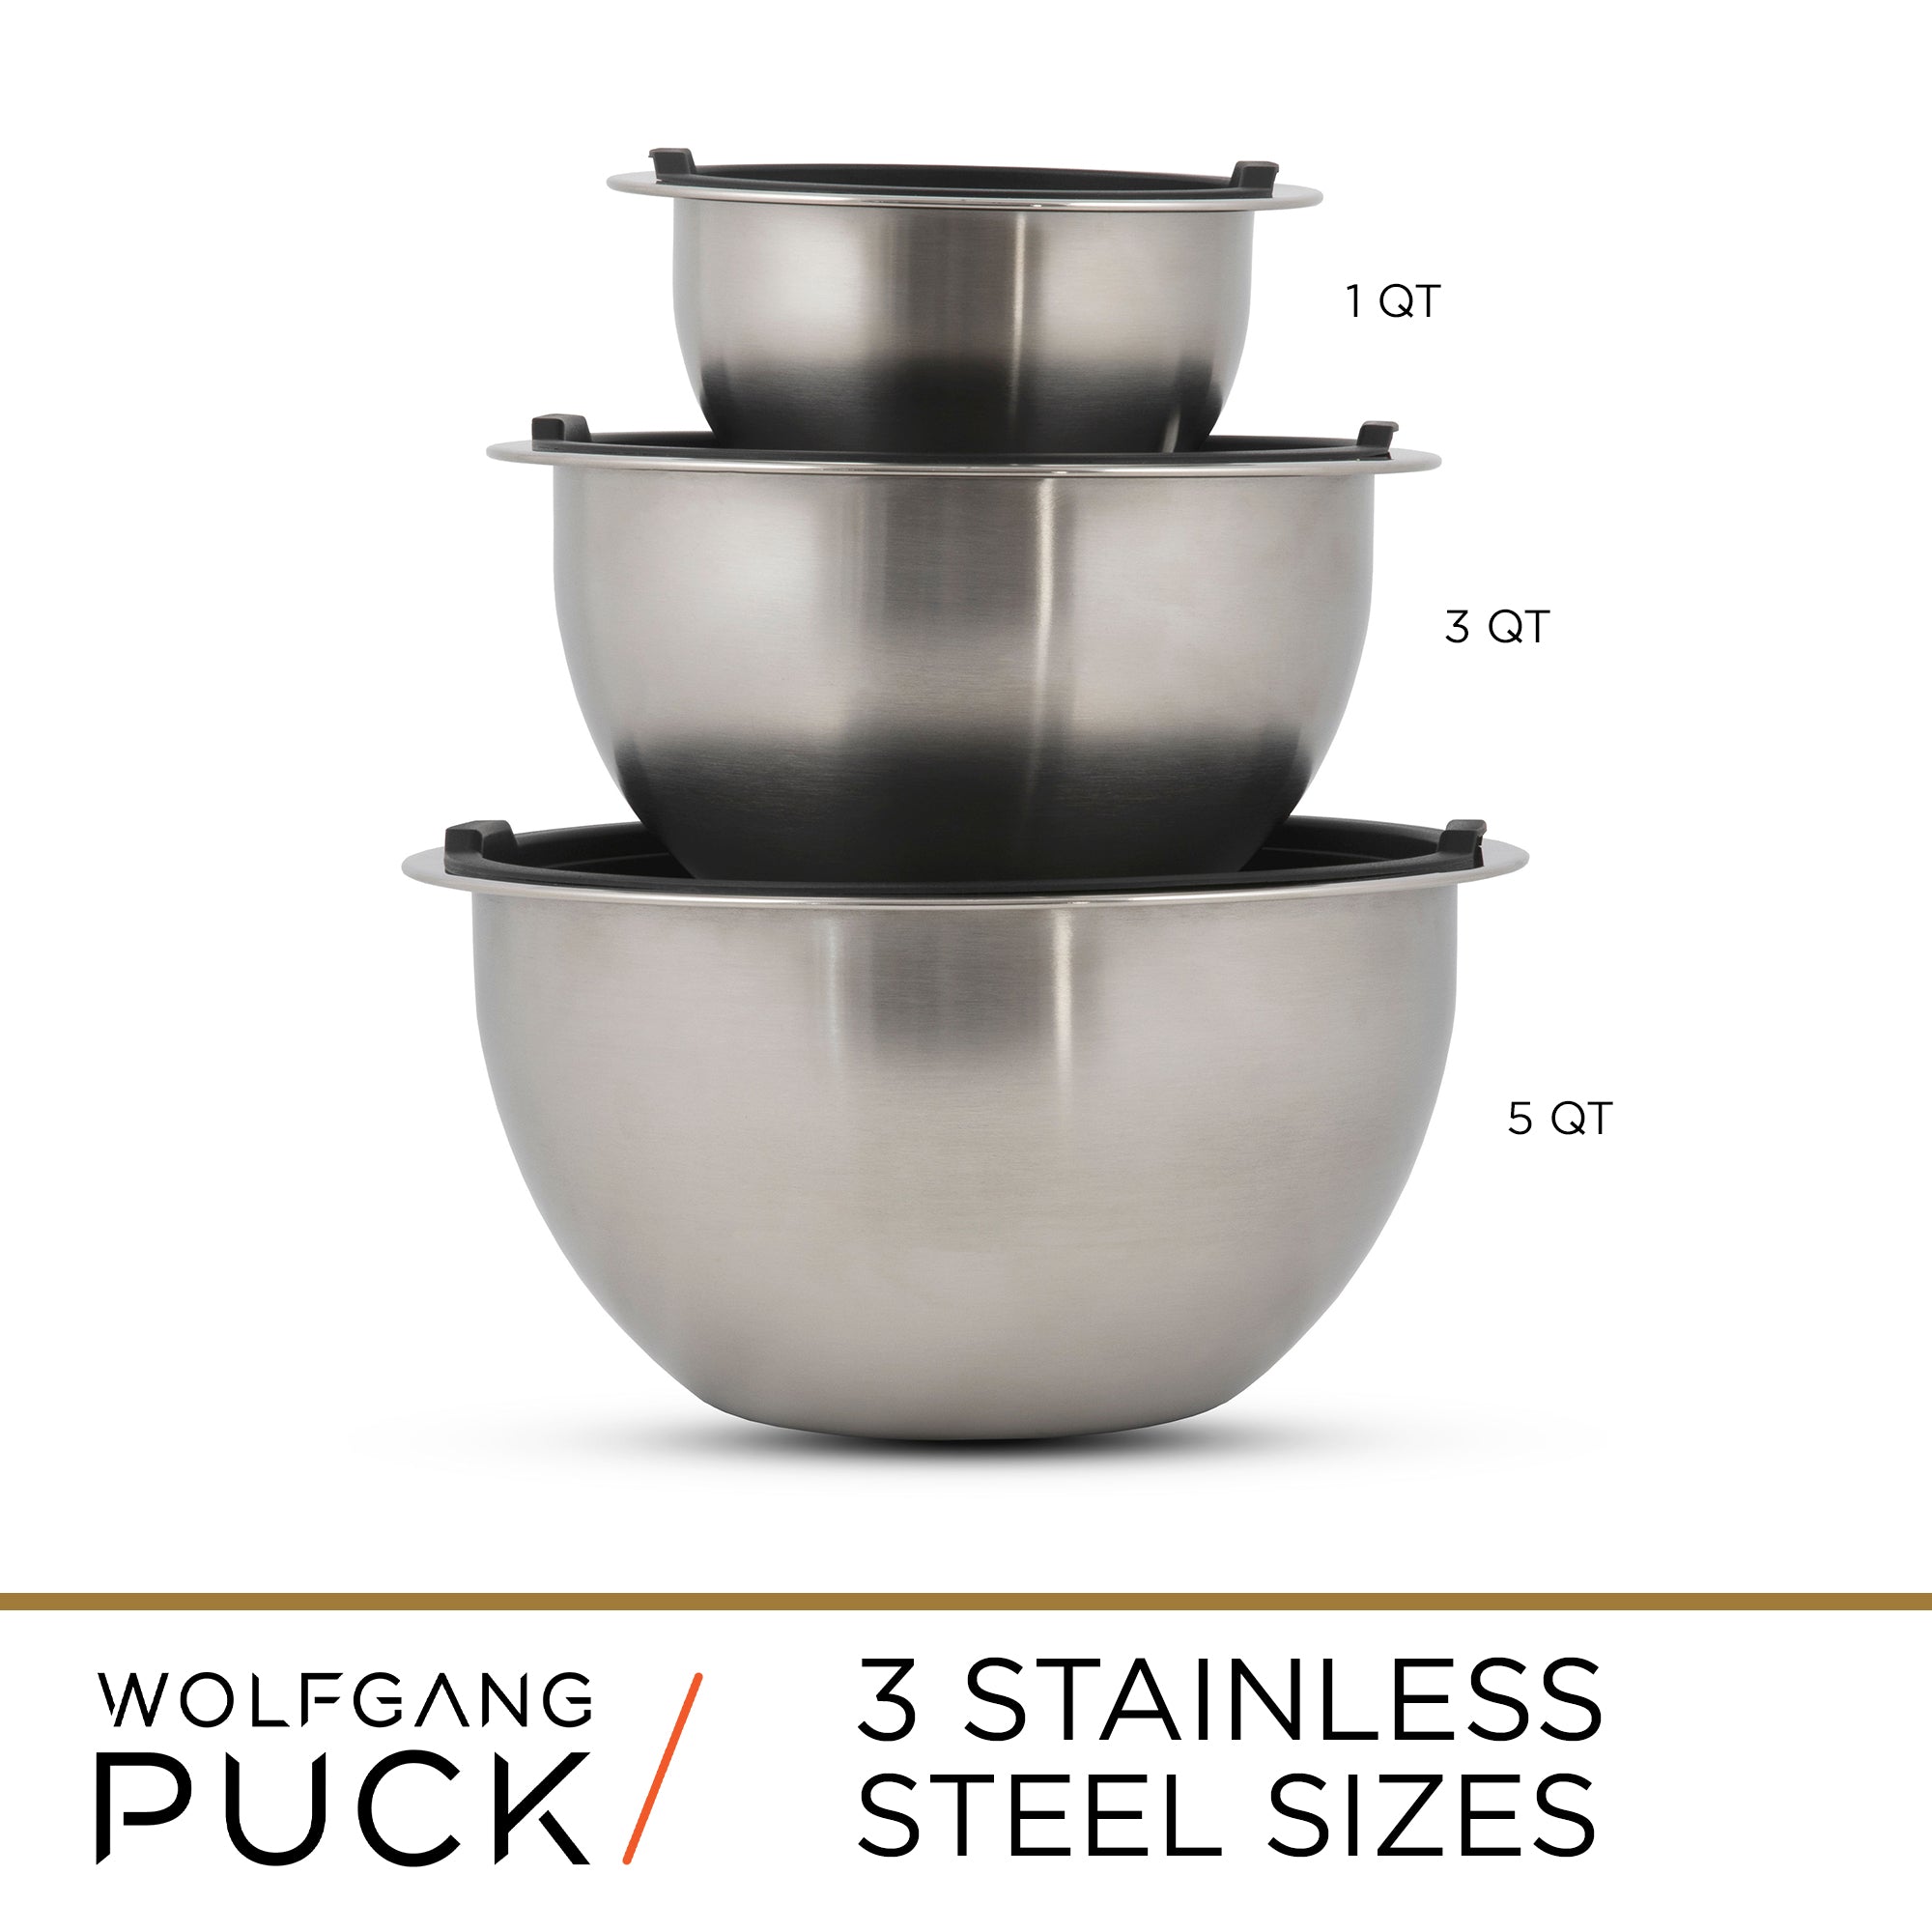 Choice Standard Stainless Steel Standard Mixing Bowl Set - 3/Set